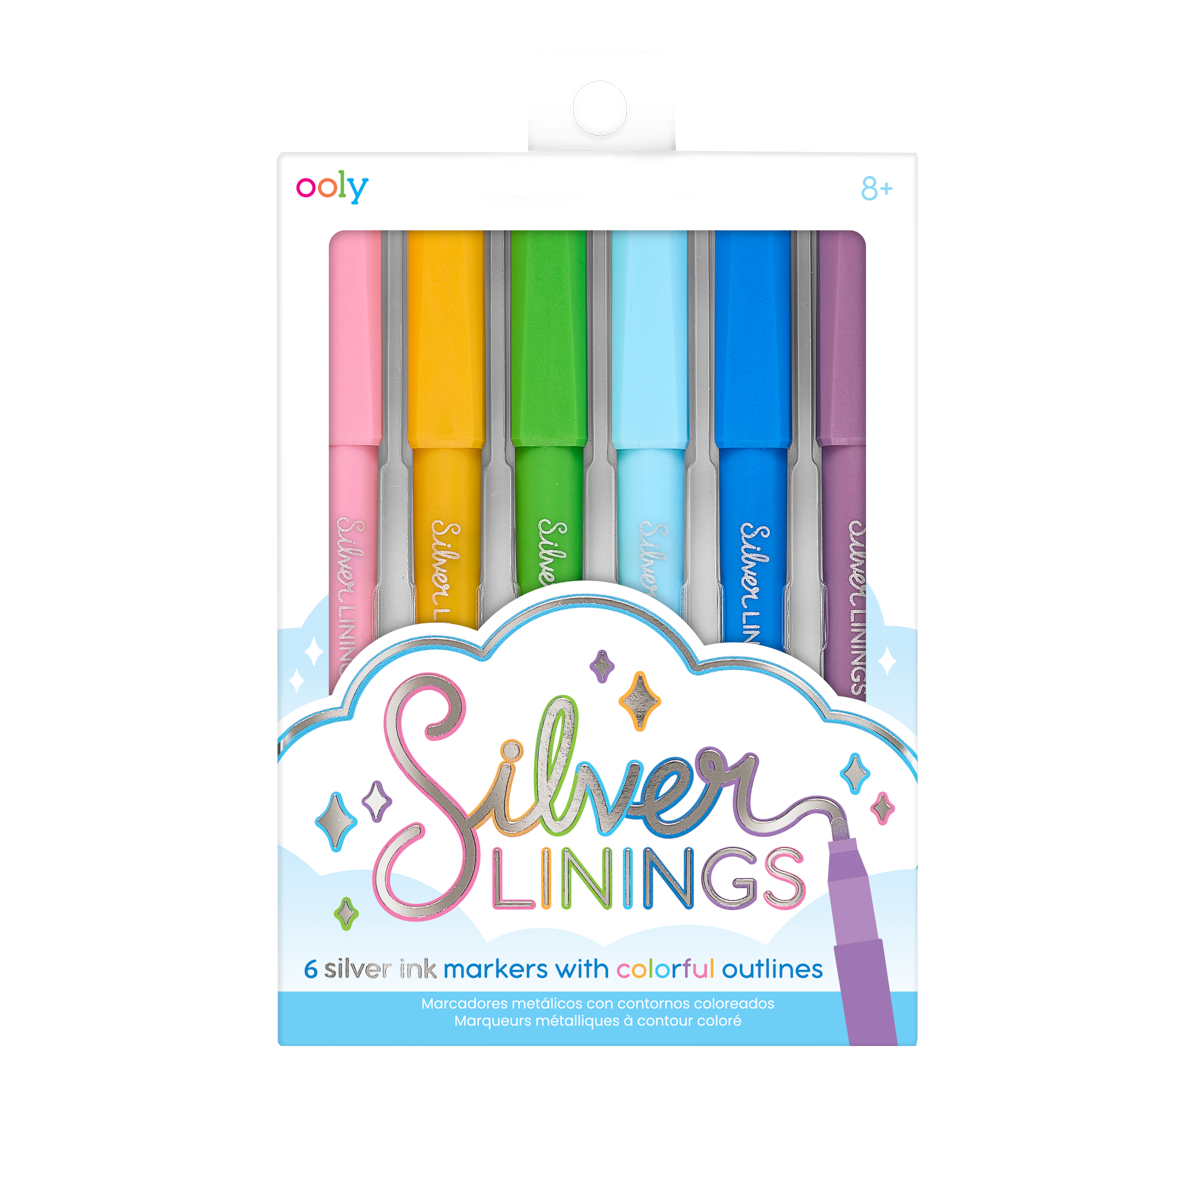 Outline Markers, Double Line Glitter Shimmer Markers Set of 8 / 12 / 24 Colors Self-outline Markers Pens for Card Making, Lettering, DIY Art Drawing